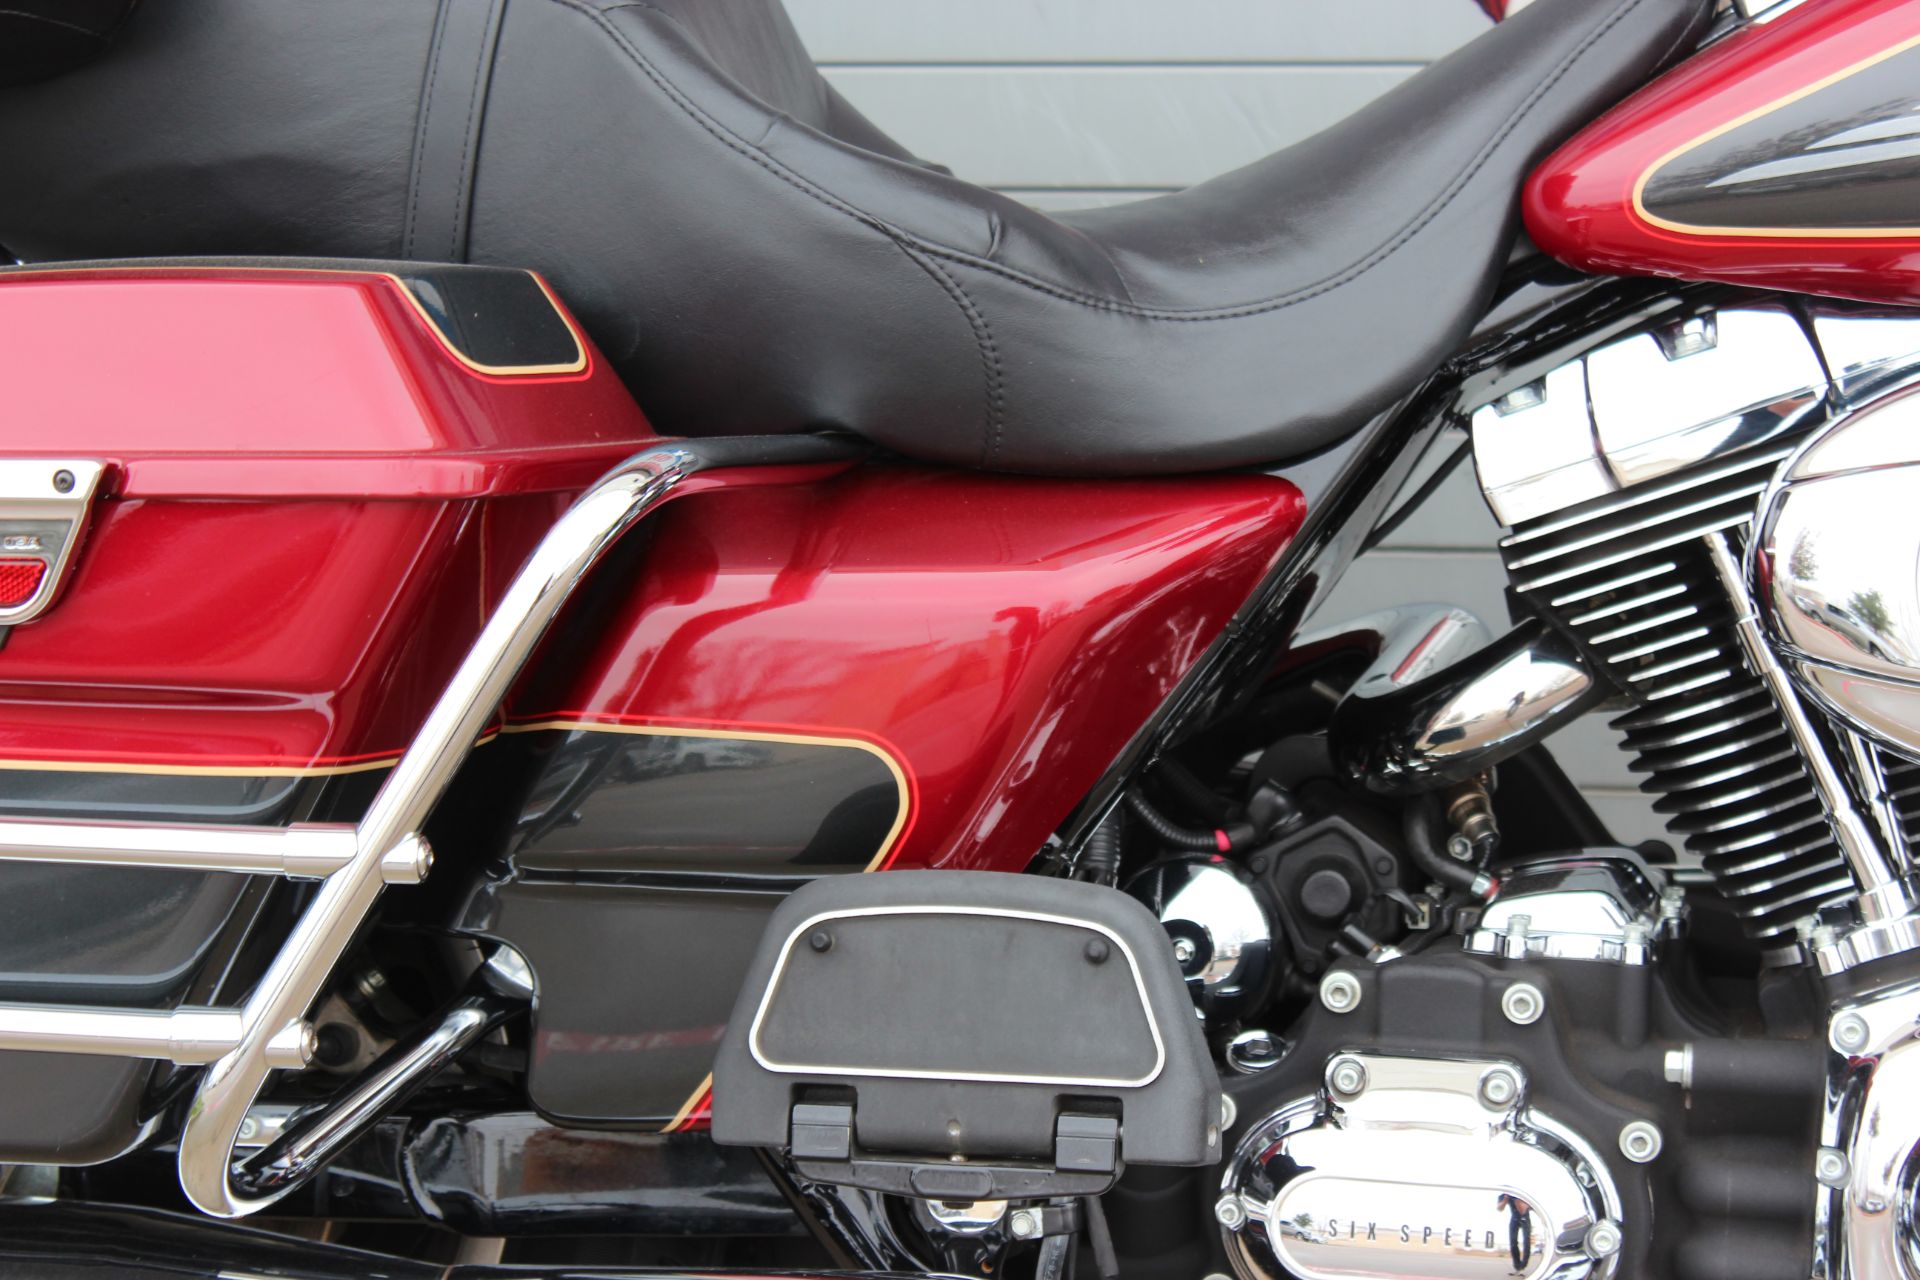 2007 Harley-Davidson FLHTCU Ultra Classic® Electra Glide® Patriot Special Edition in Grand Prairie, Texas - Photo 8